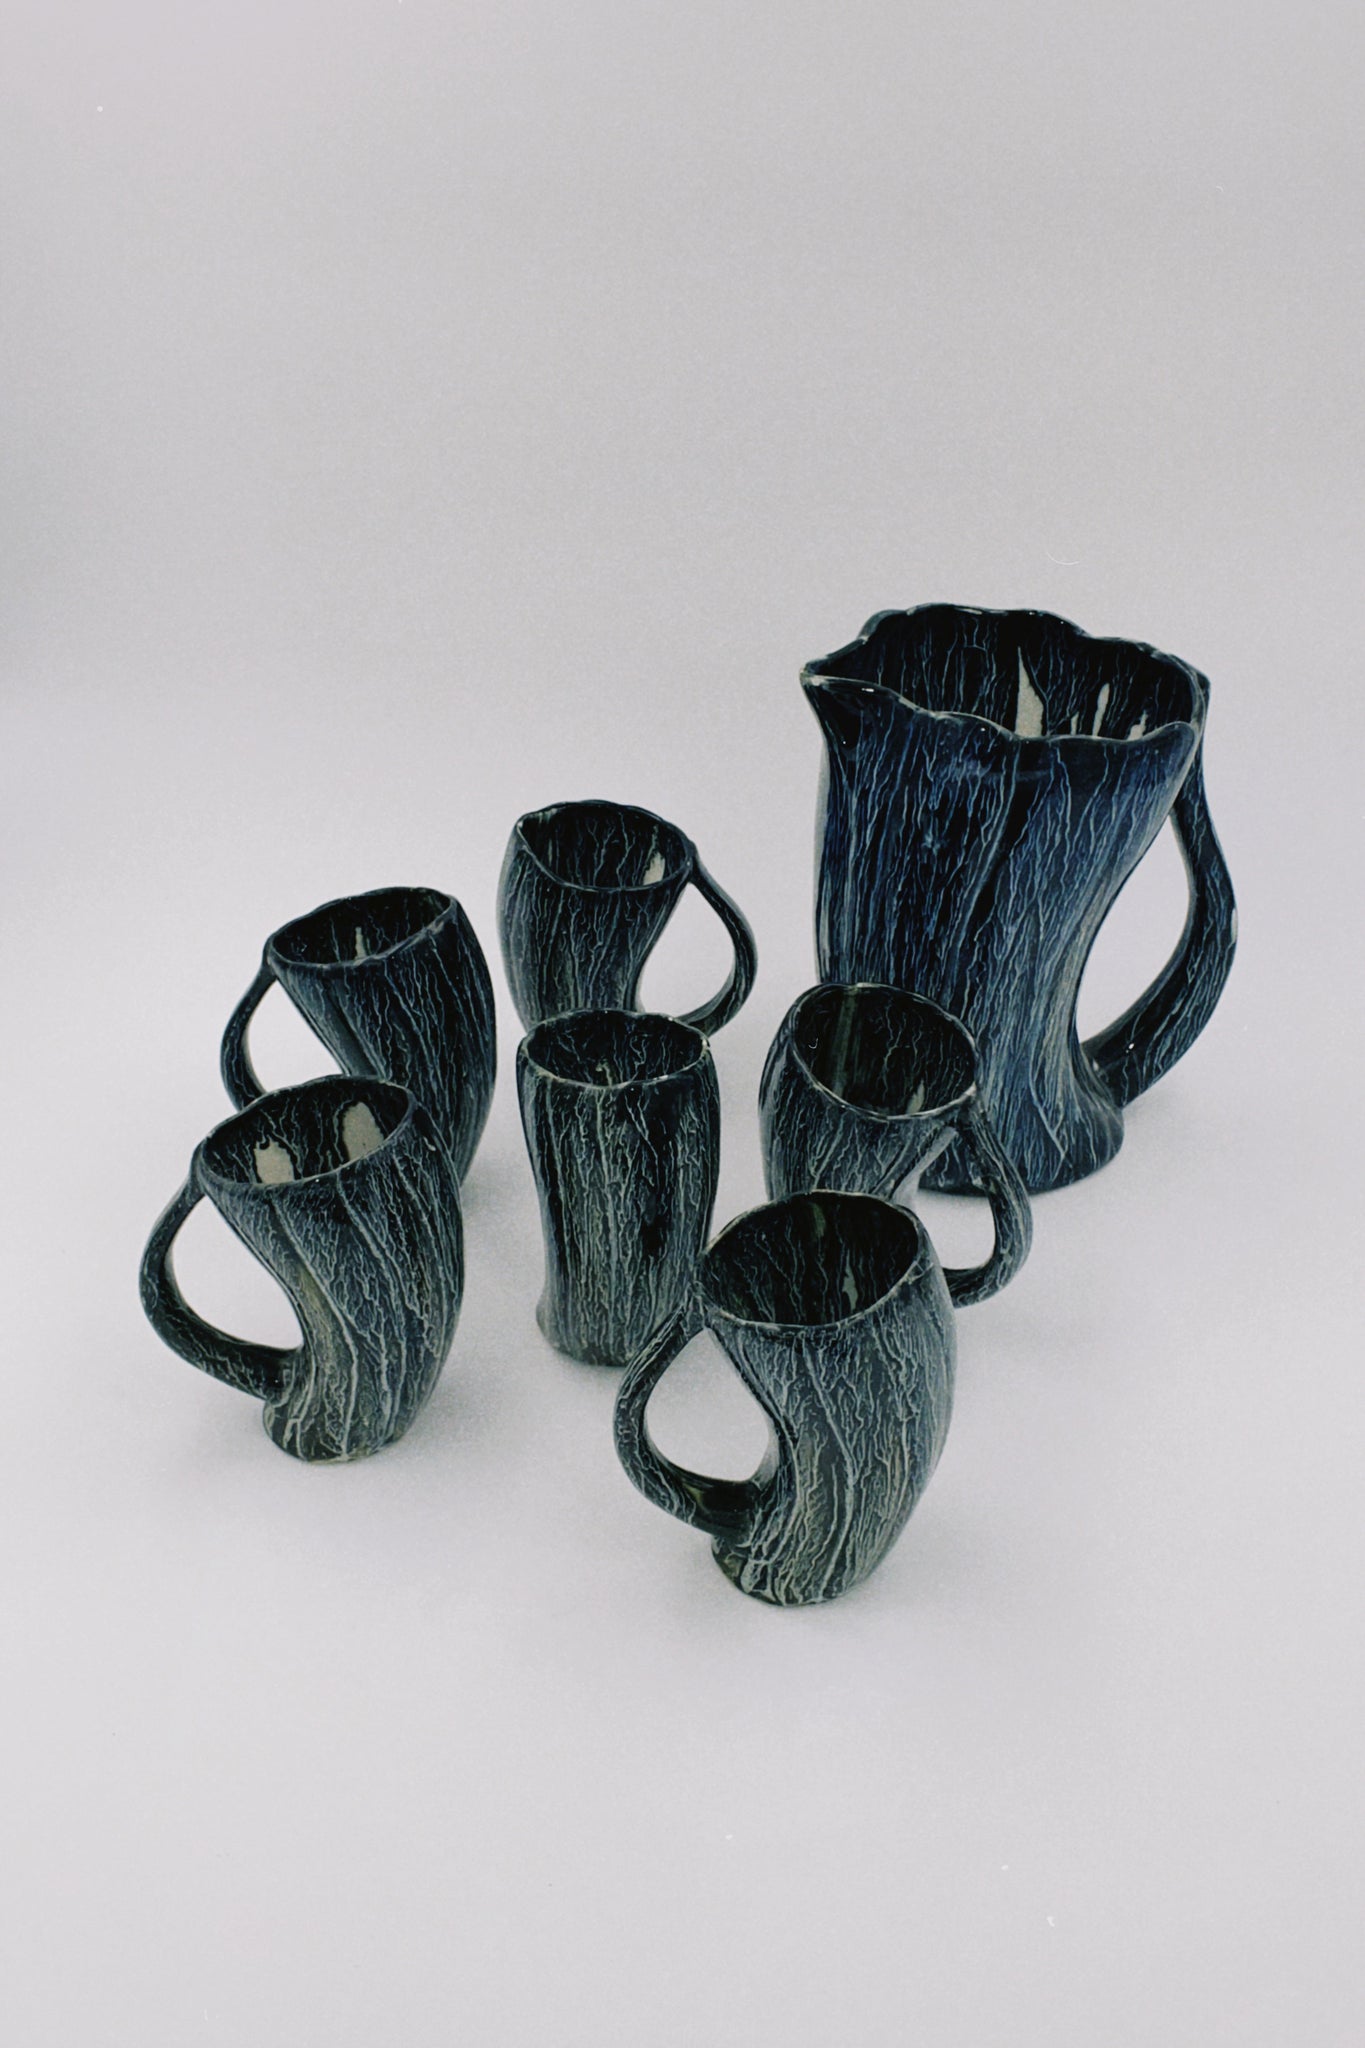 Ceramic Set of Mugs and Carafe